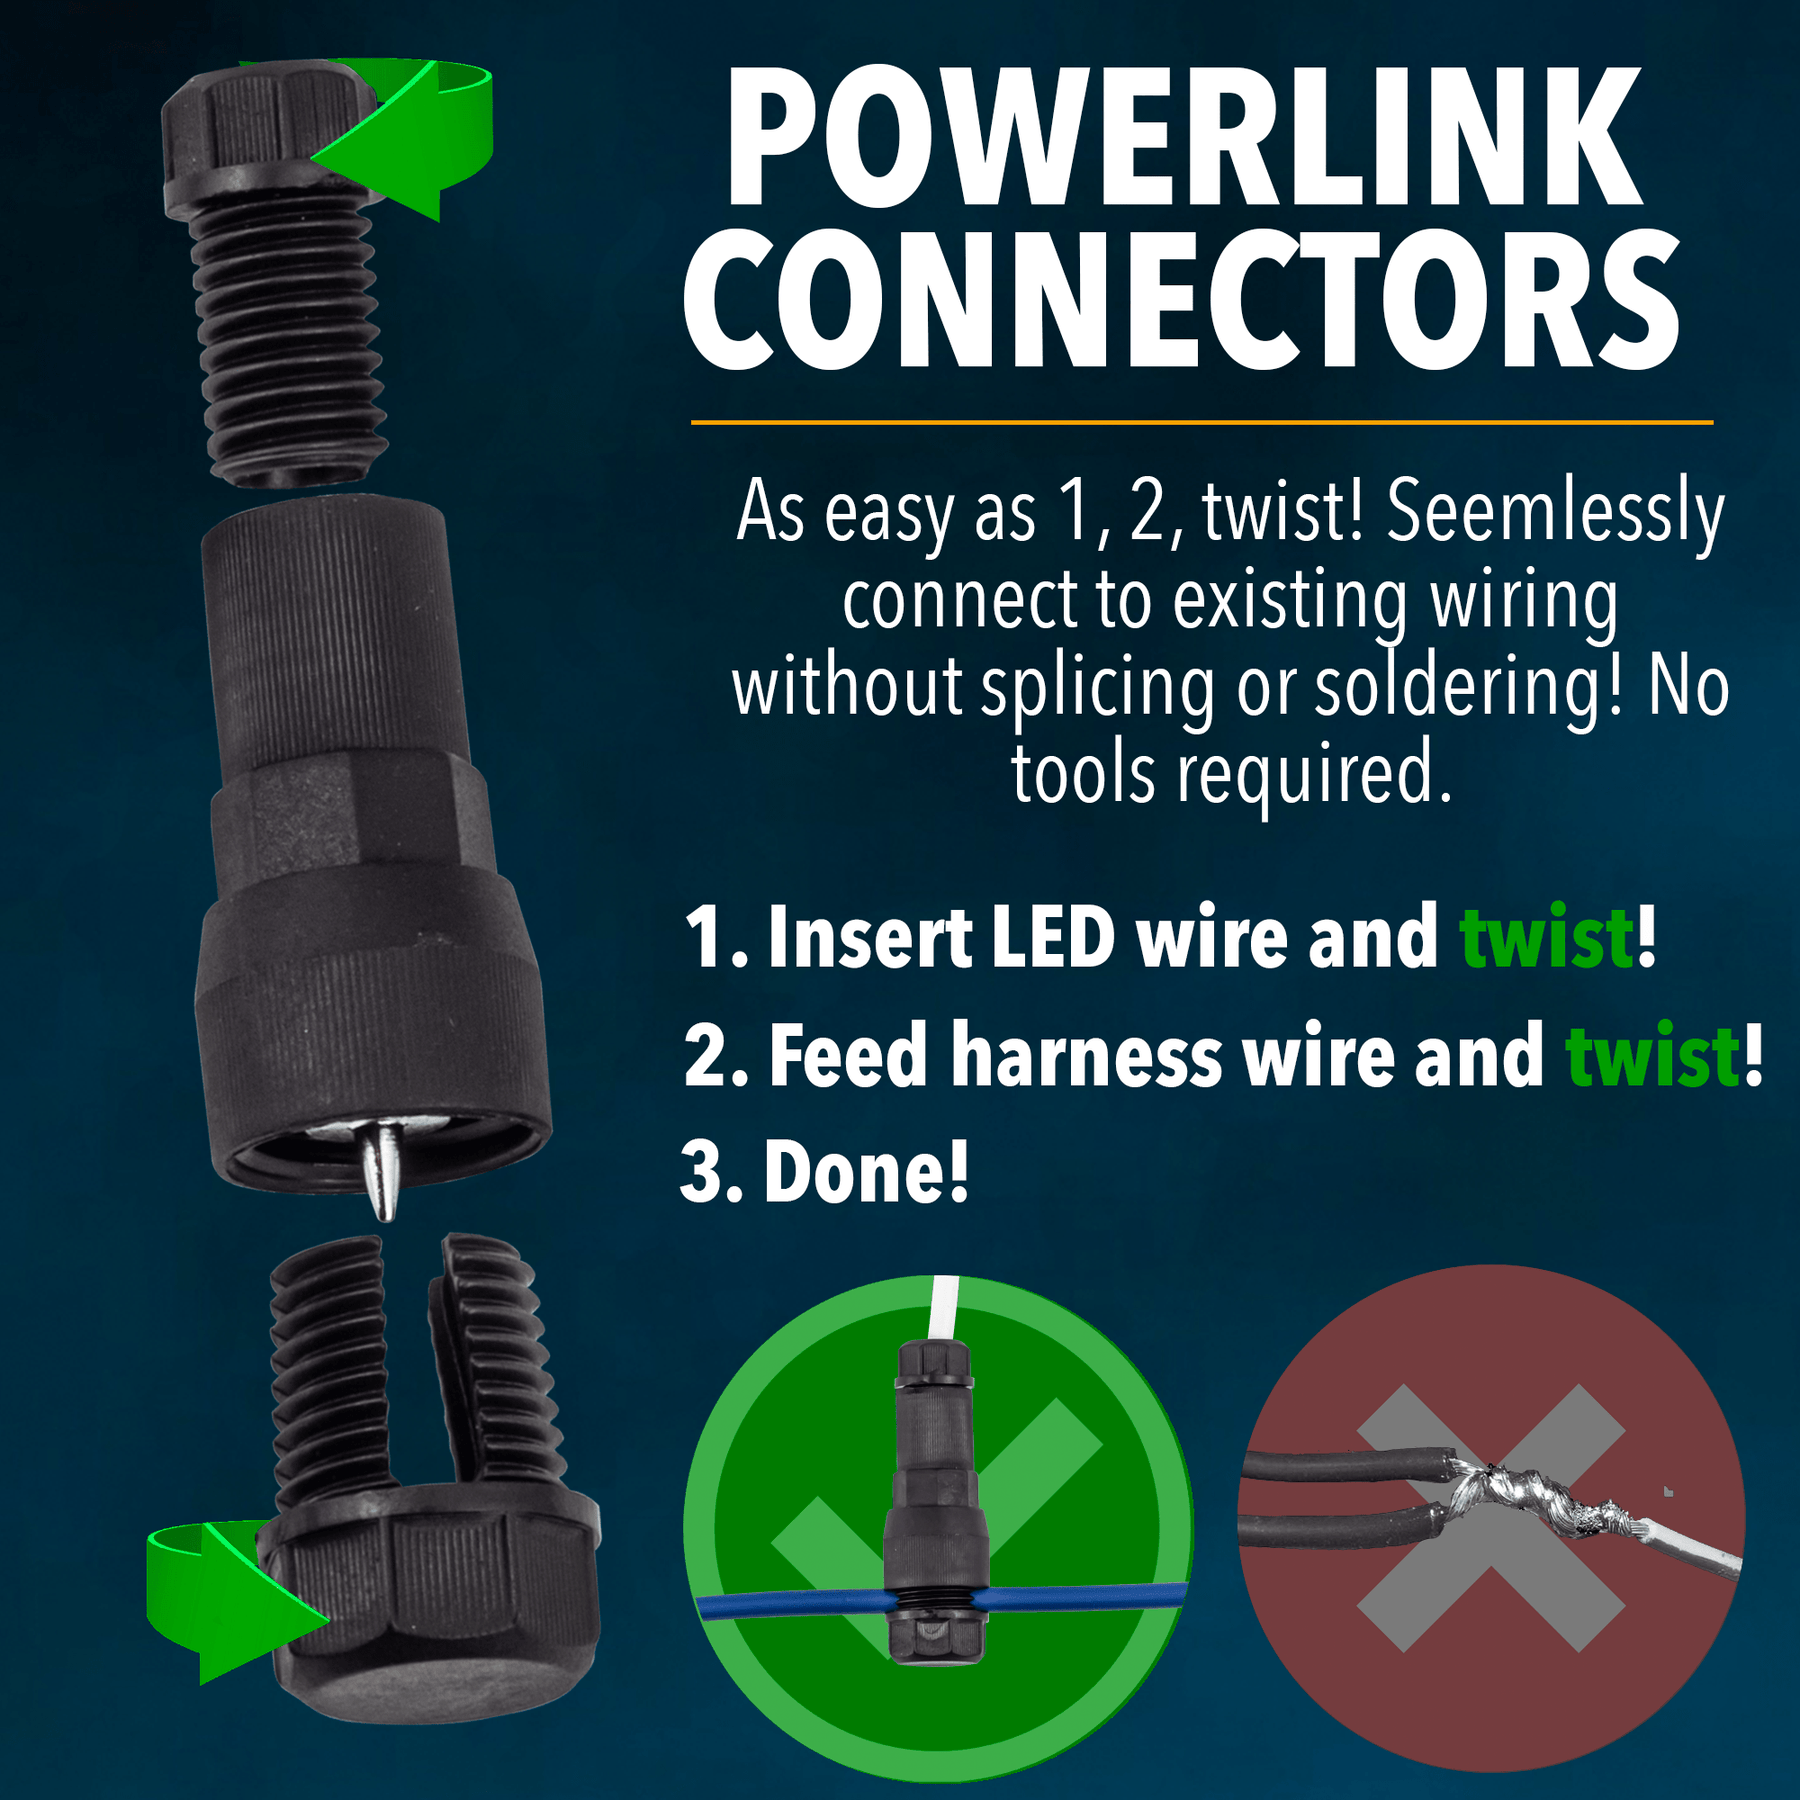 Eagle Lights PowerLink Connectors for 18 - 20 Gauge Wire - 6 Pack